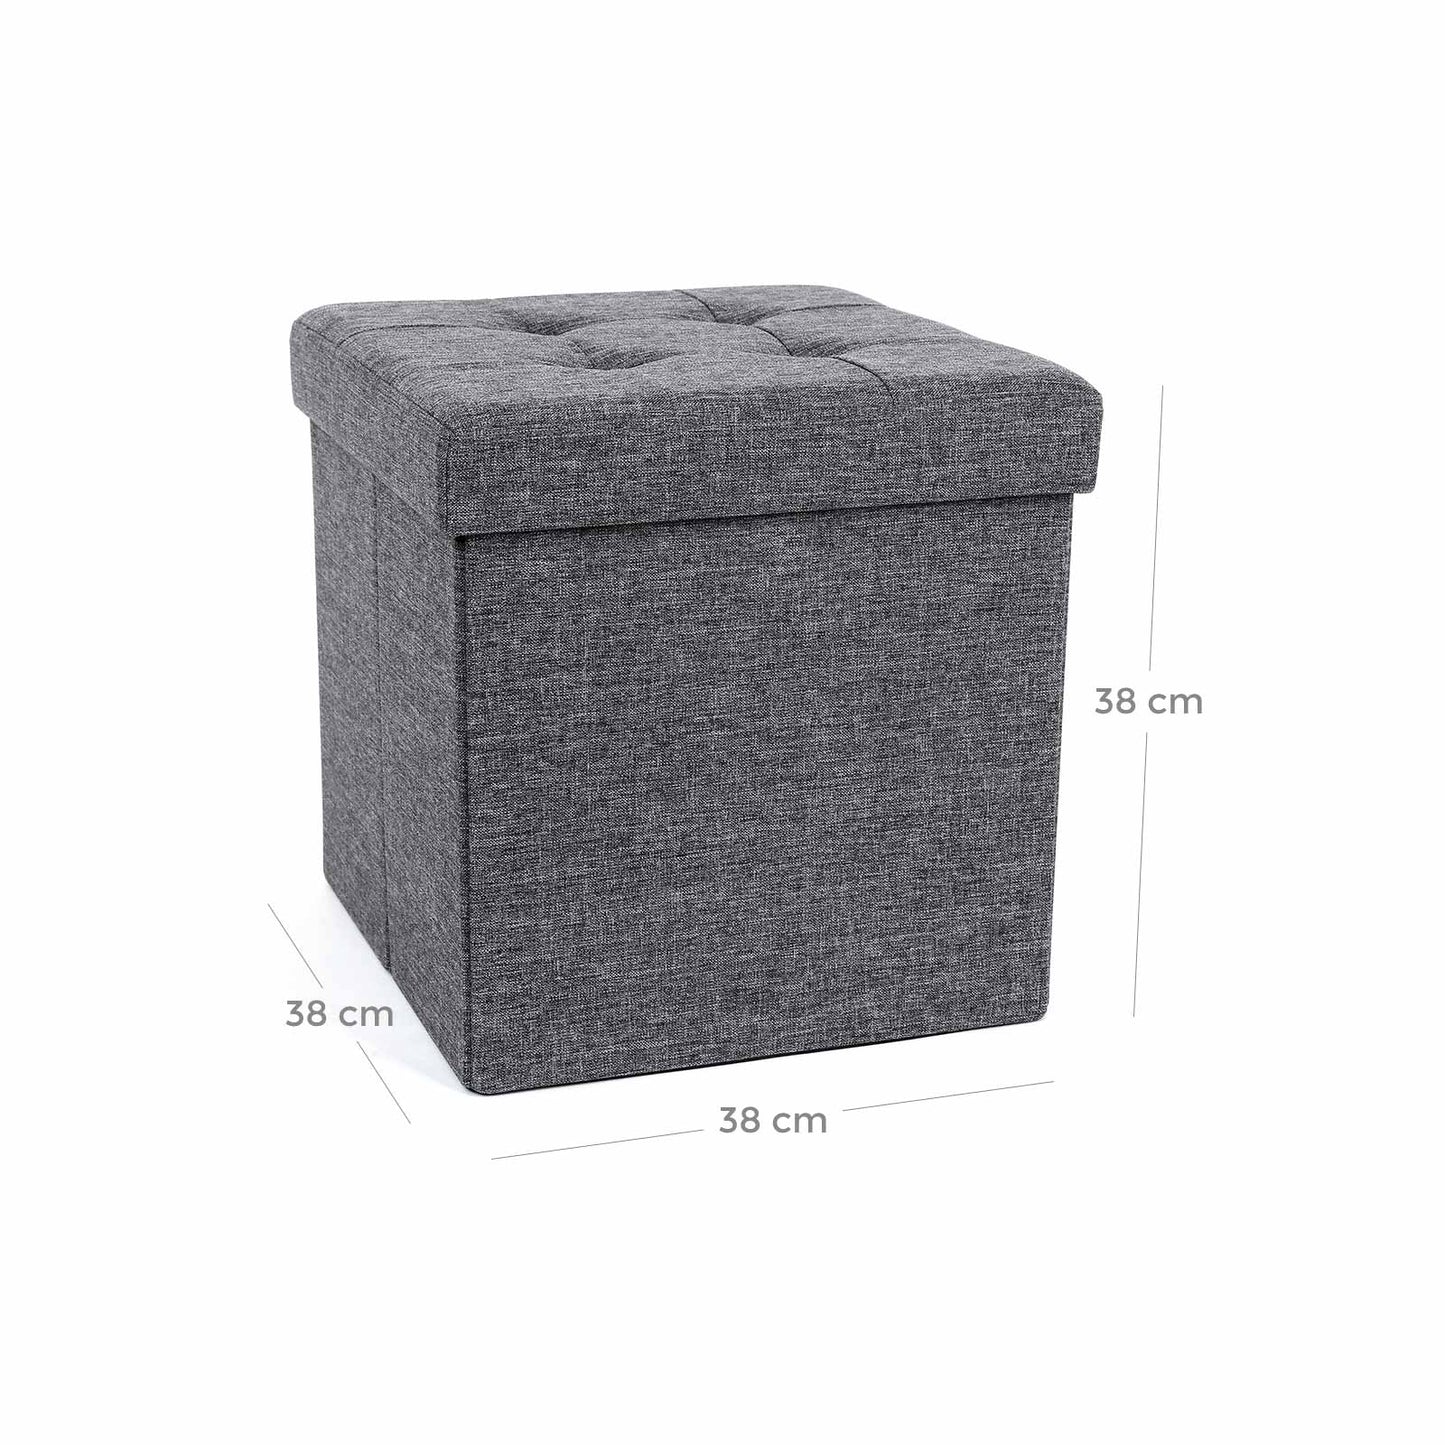 Folding Storage Chest Ottoman Footstool Portable Picnic Seat Versatile Space-saving CubesMax Load 300 kg, 6